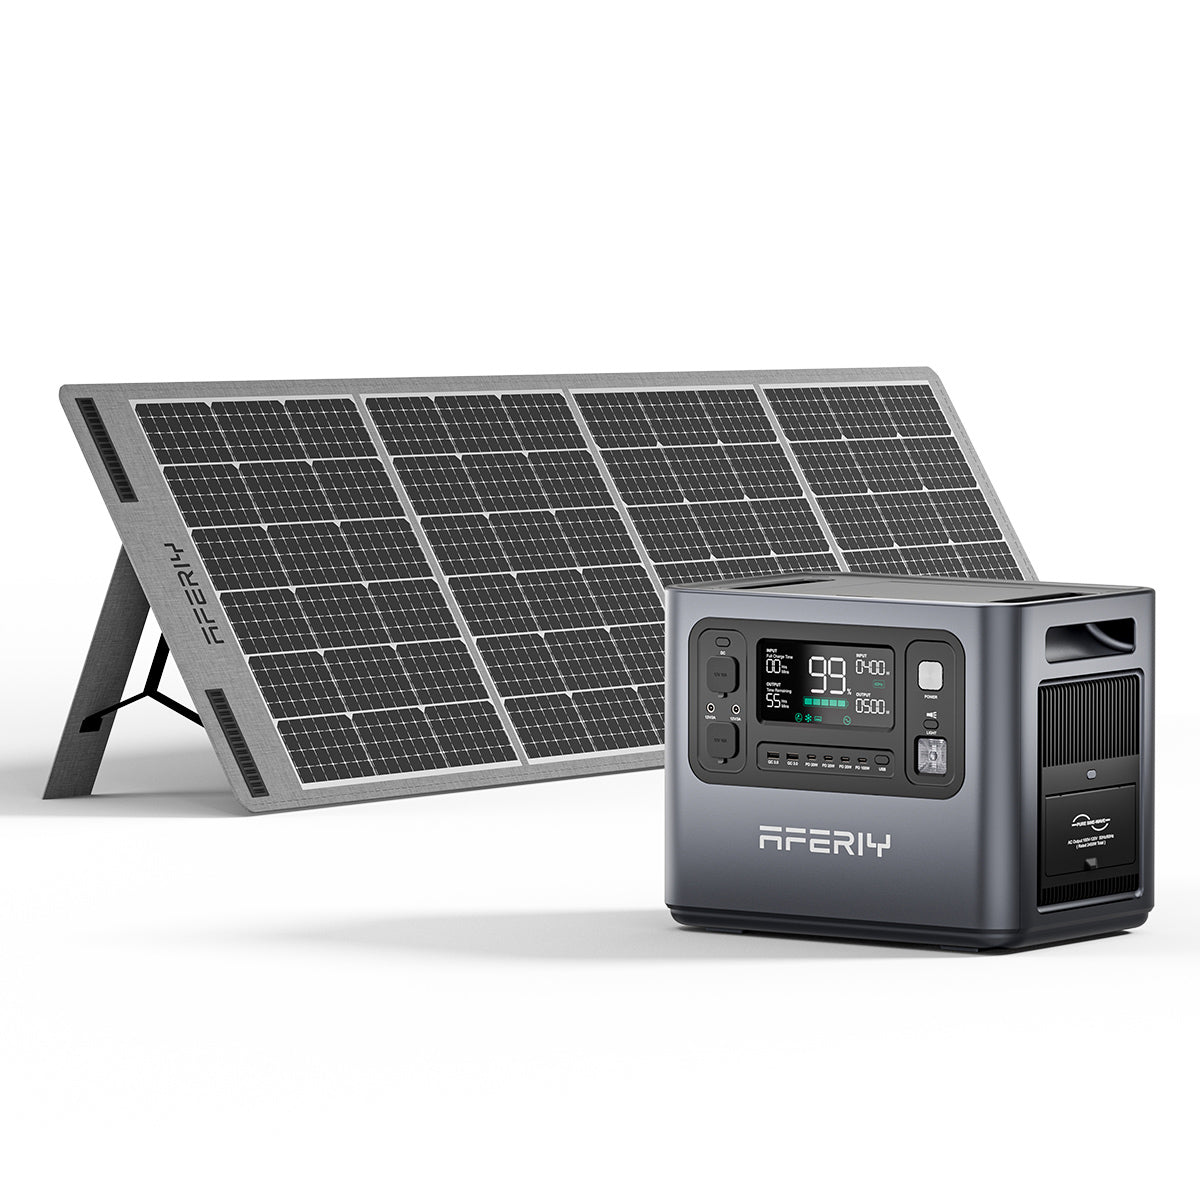 AFERIY P210 2400W Solar Generator Kit